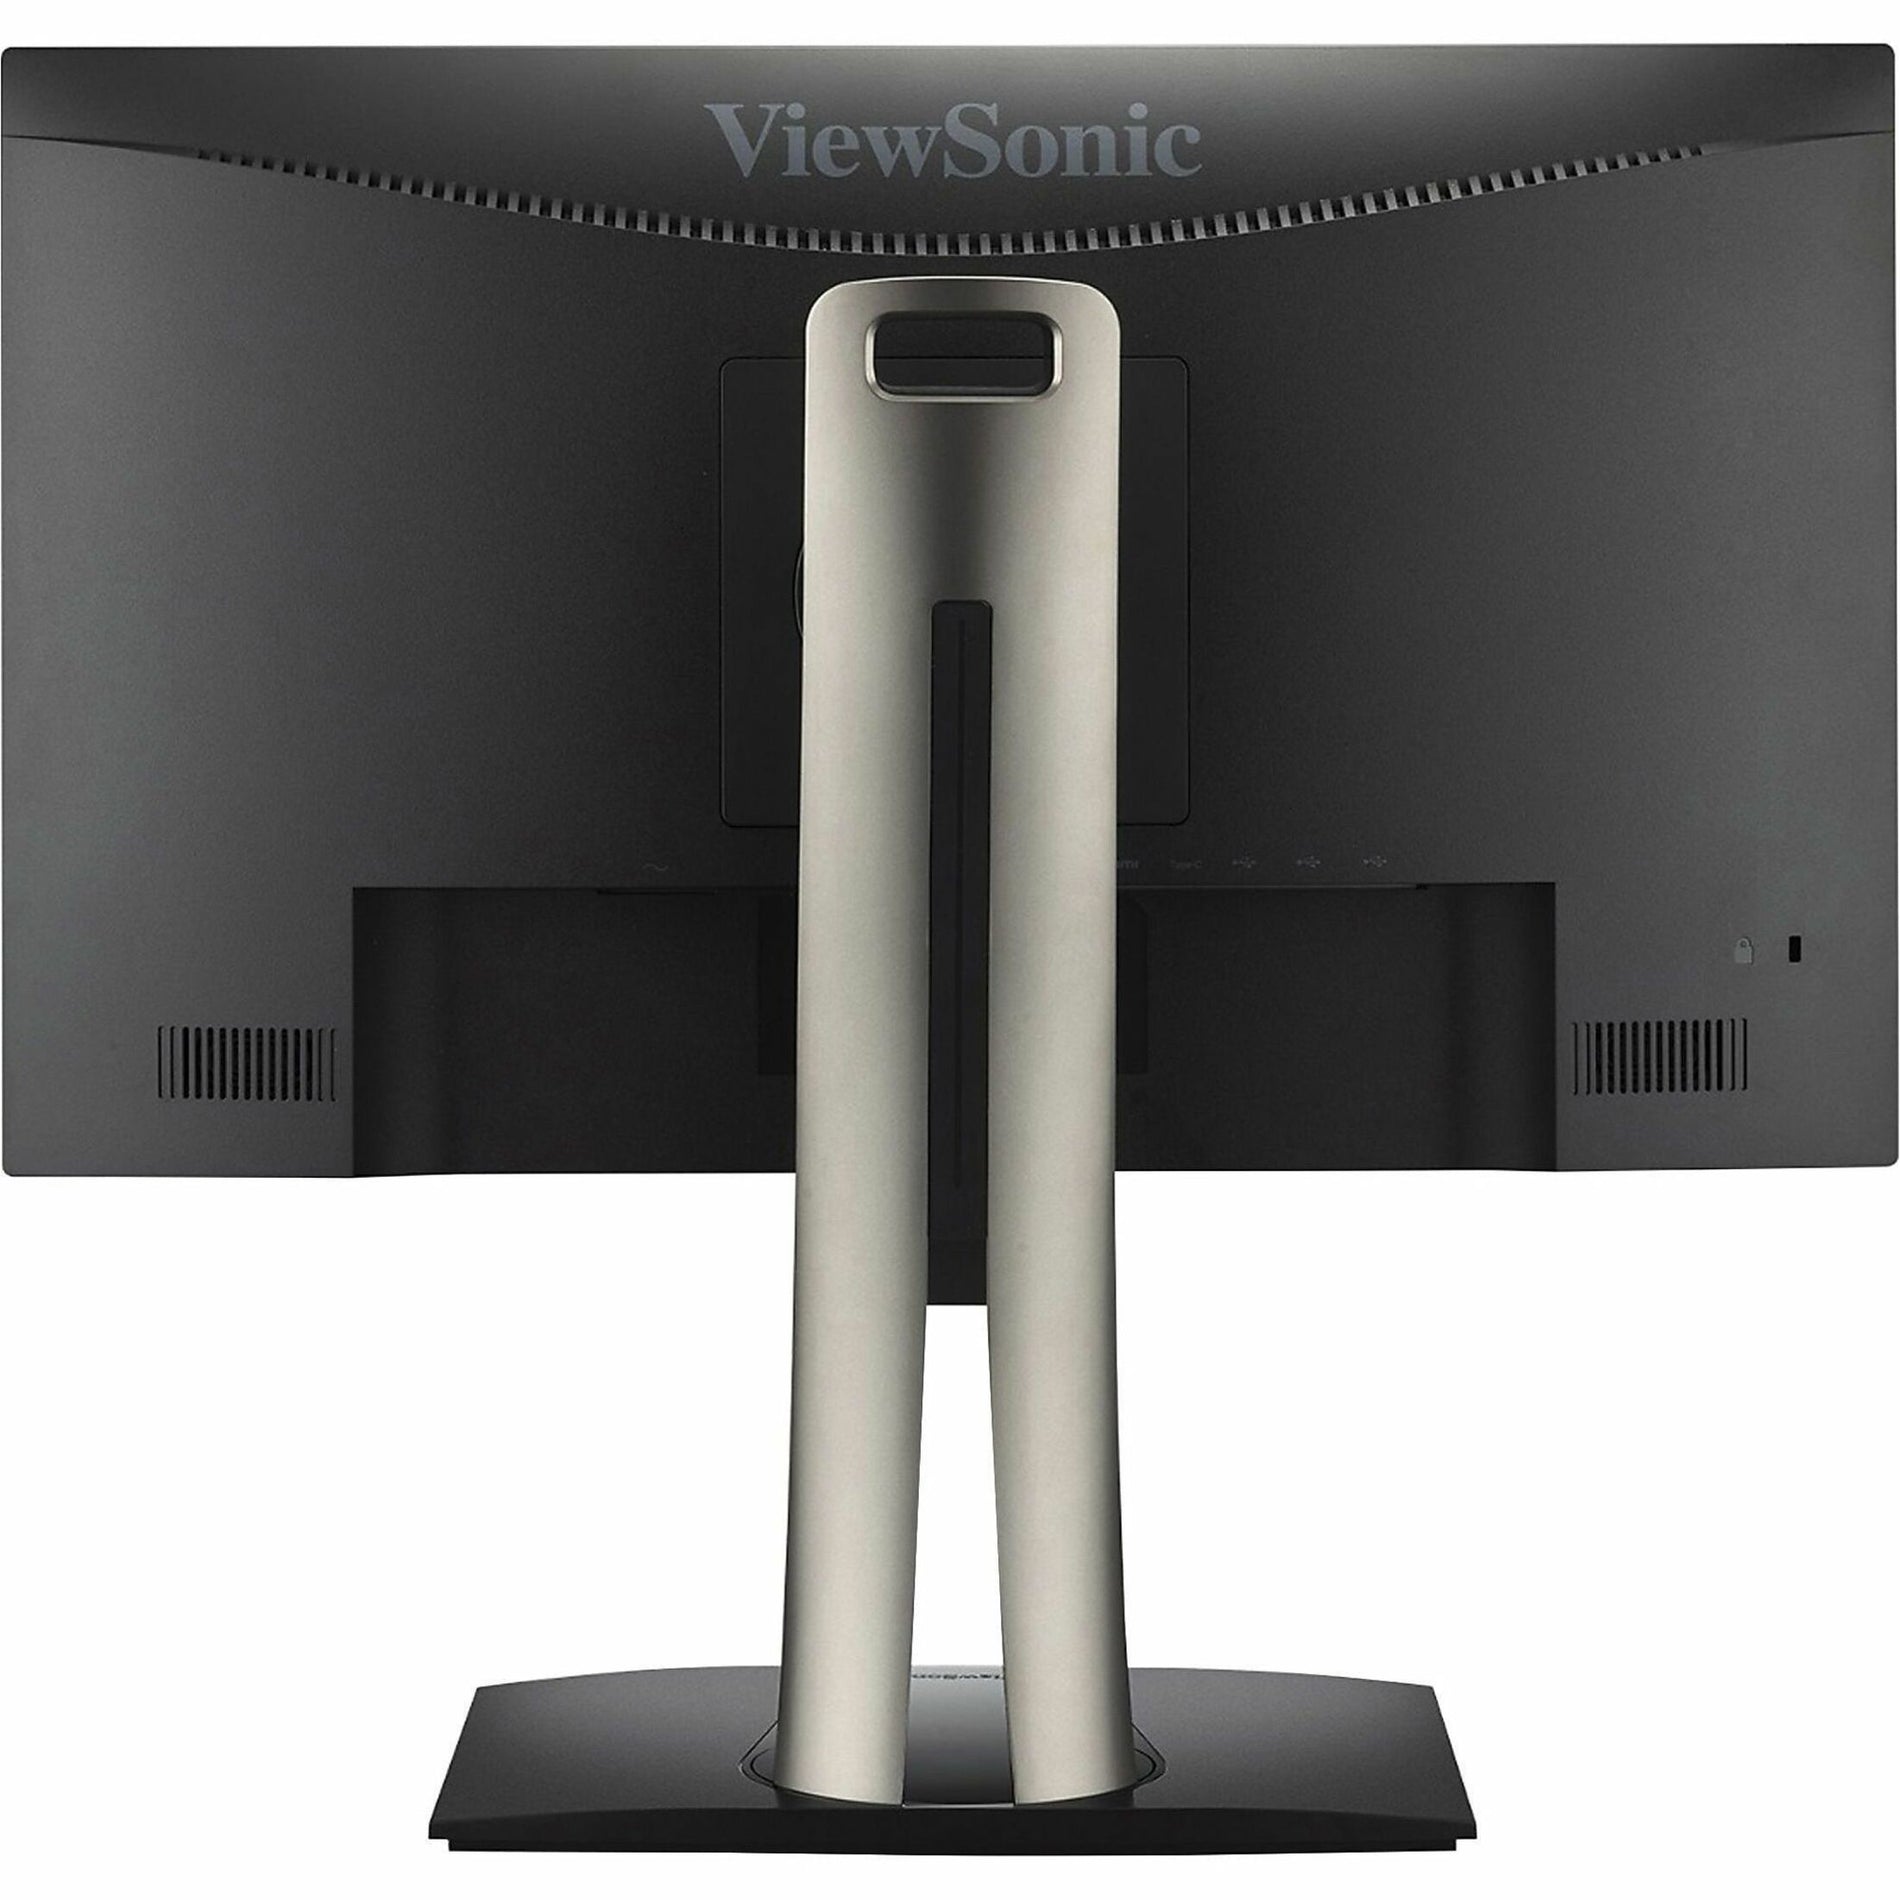 ViewSonic VP2456 ColorPro 24" IPS Monitor, 1080p, USB-C, sRGB, Pantone Validated